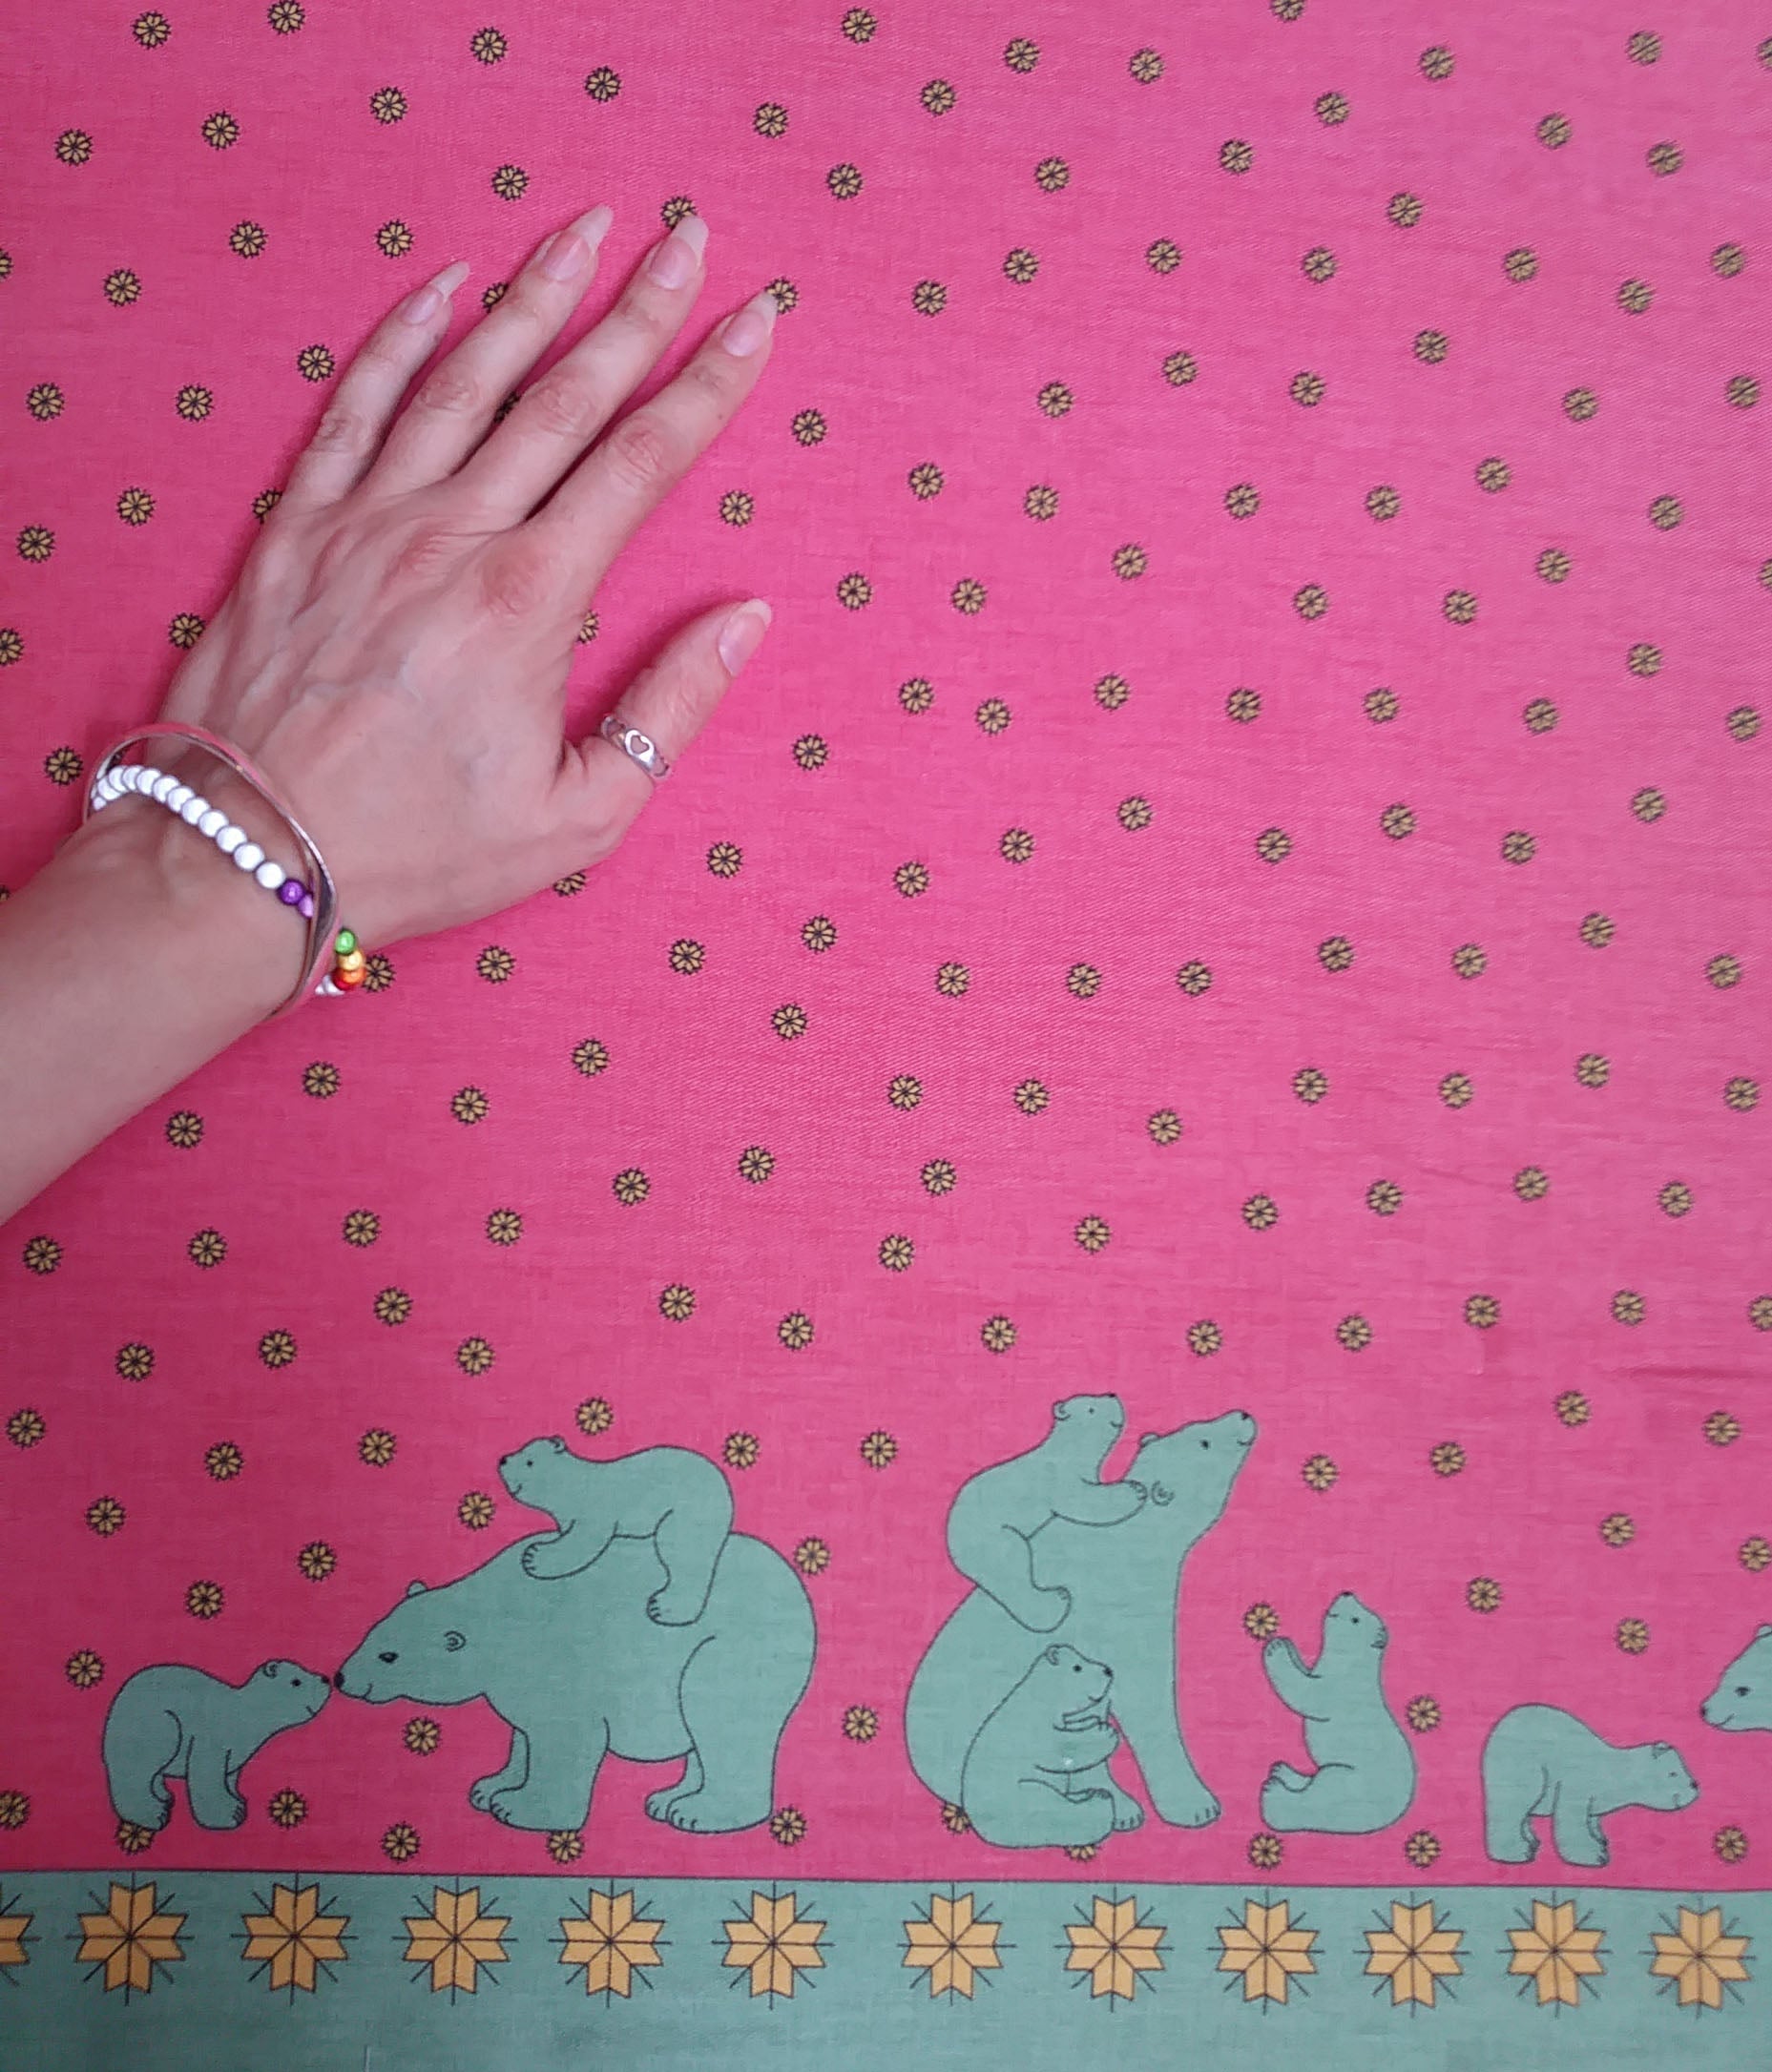 Remnant - 2m - Pink/Green Polar Bear Fabric - Cotton twill